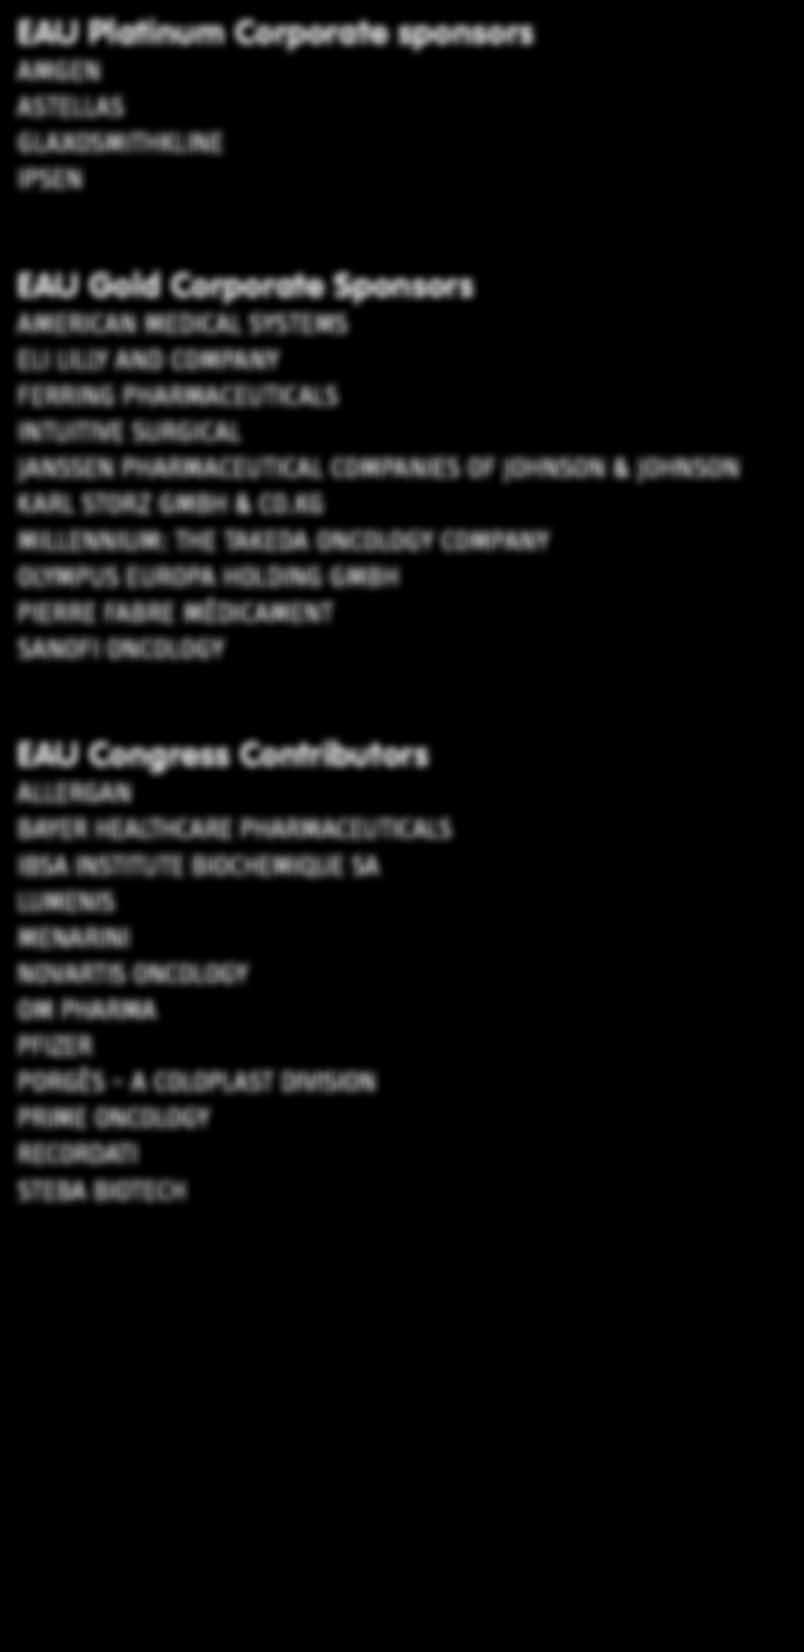 KG MILLENNIUM: THE TAKEDA ONCOLOGY COMPANY OLYMPUS EUROPA HOLDING GMBH PIERRE FABRE MÉDICAMENT SANOFI ONCOLOGY EAU Congress Contributors ALLERGAN BAYER